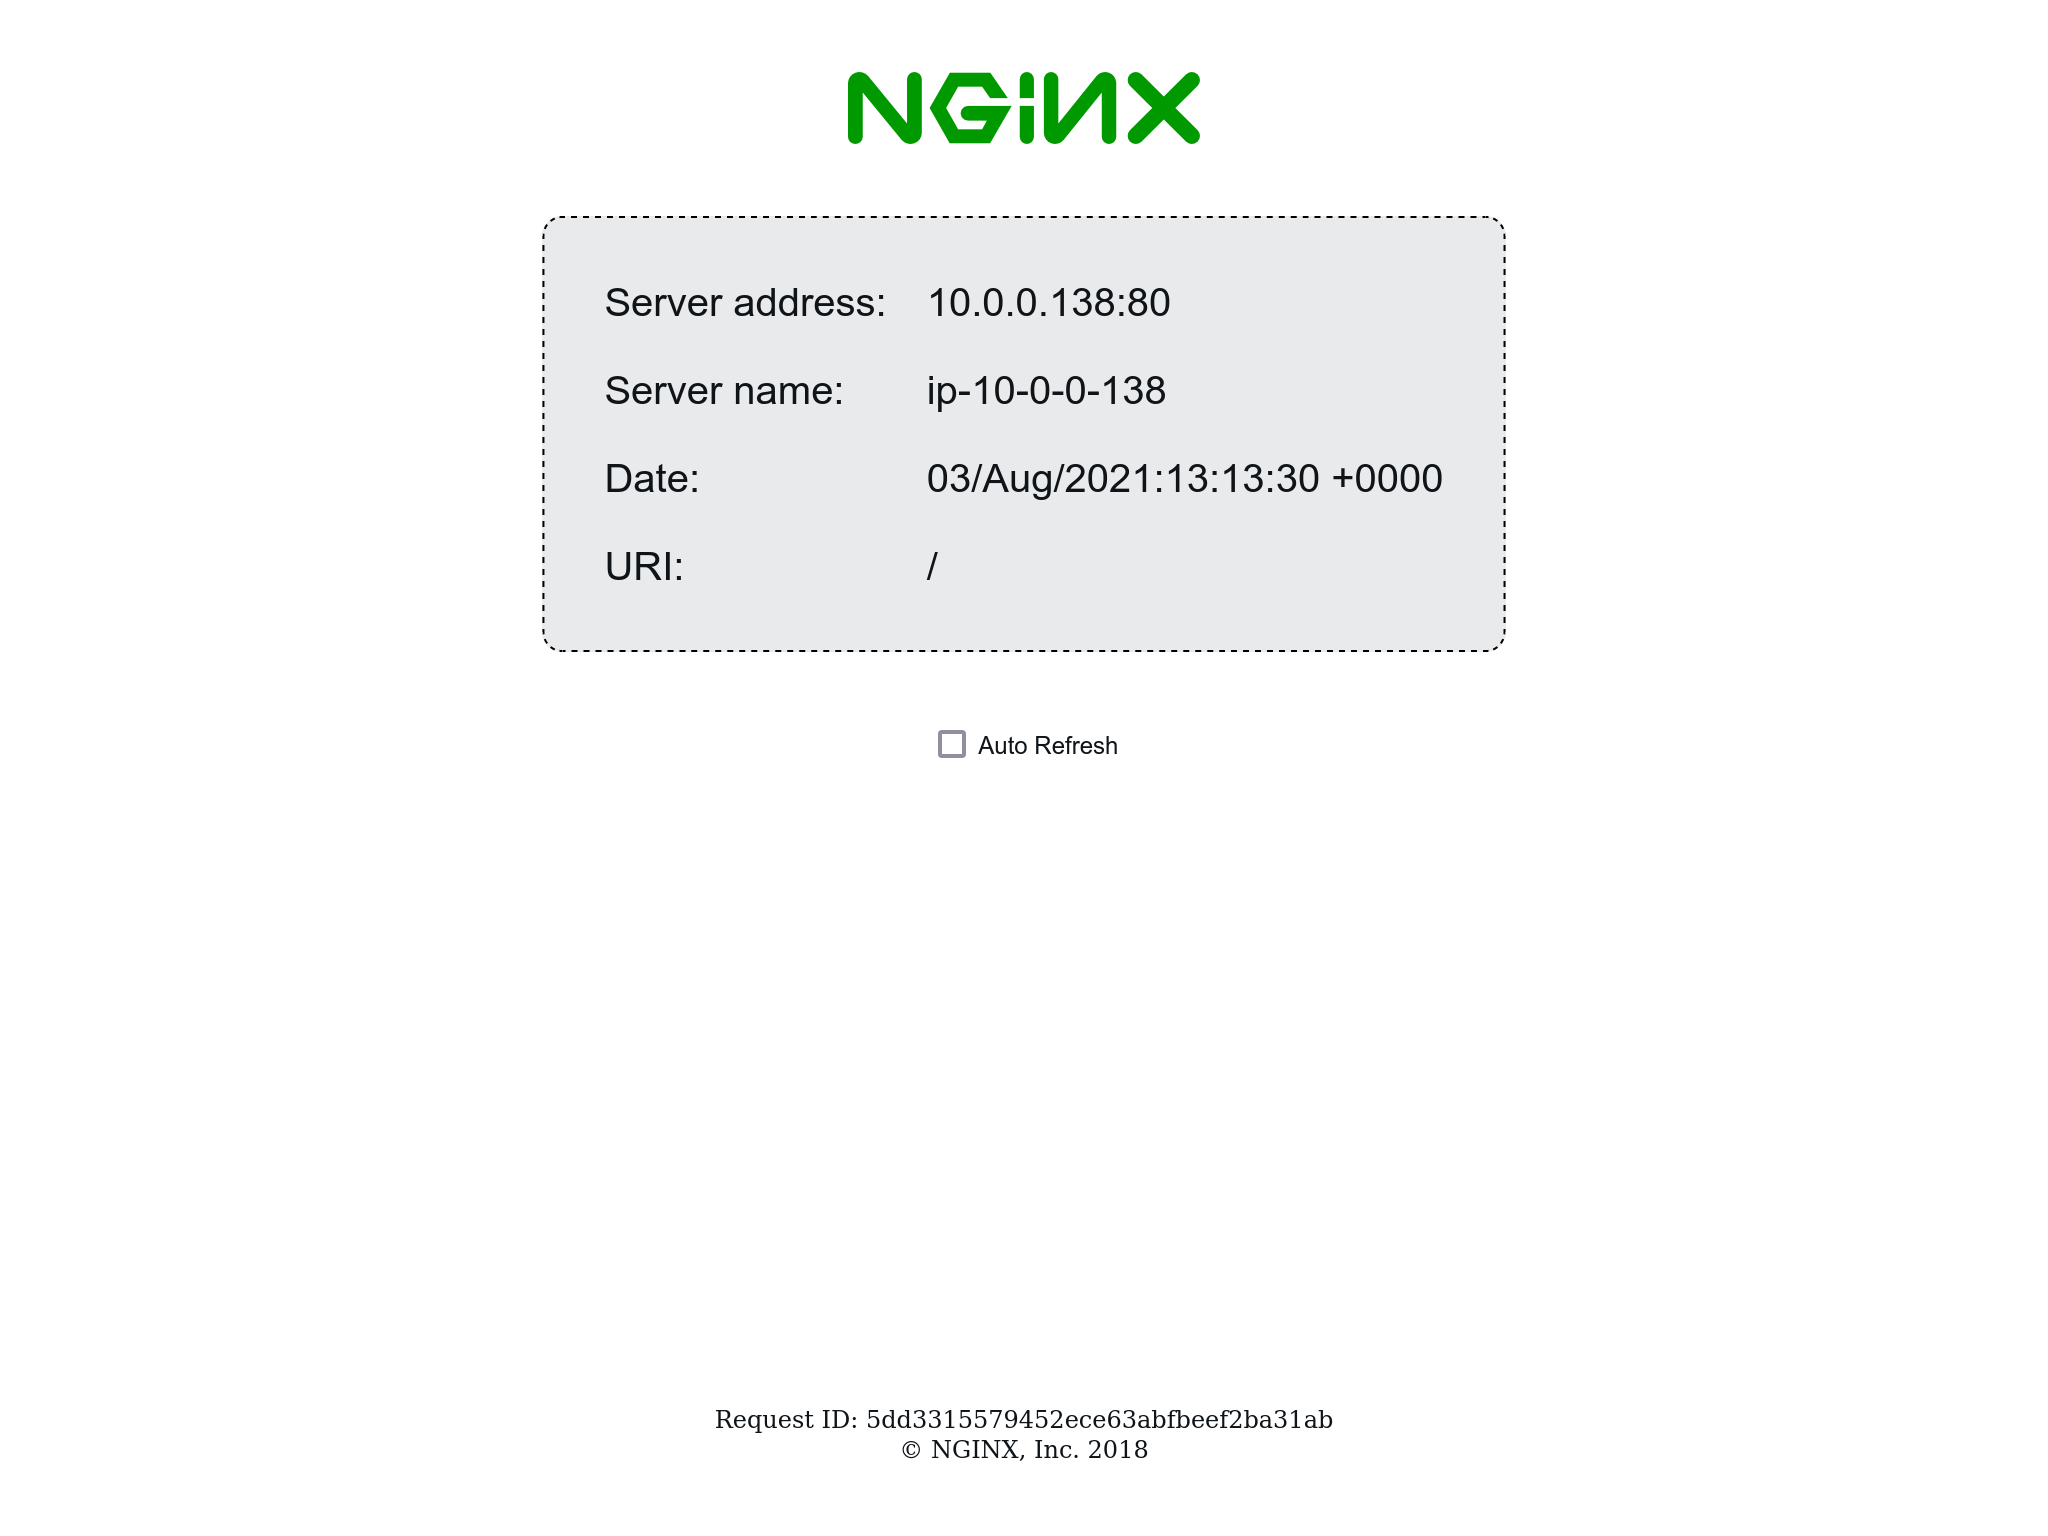 BigIP Load Balancer redirecting traffic to NGINX instances